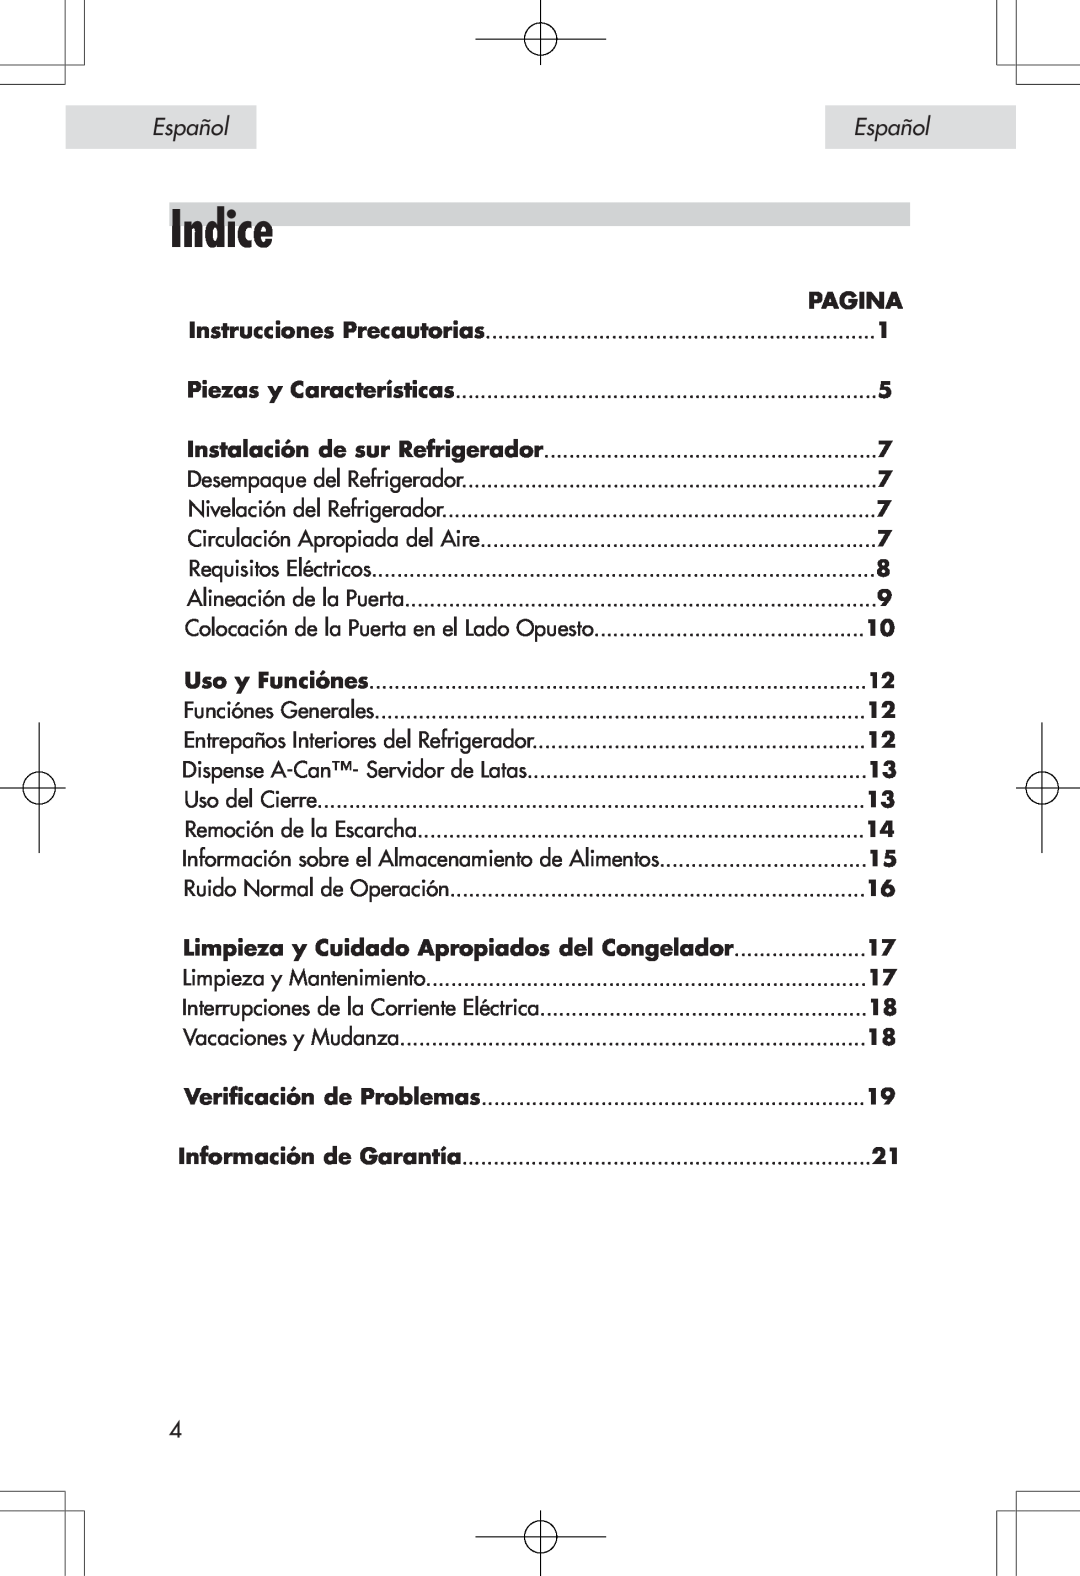 Haier HSE04WNA, HSP04WNA user manual Indice, Pagina, Español 